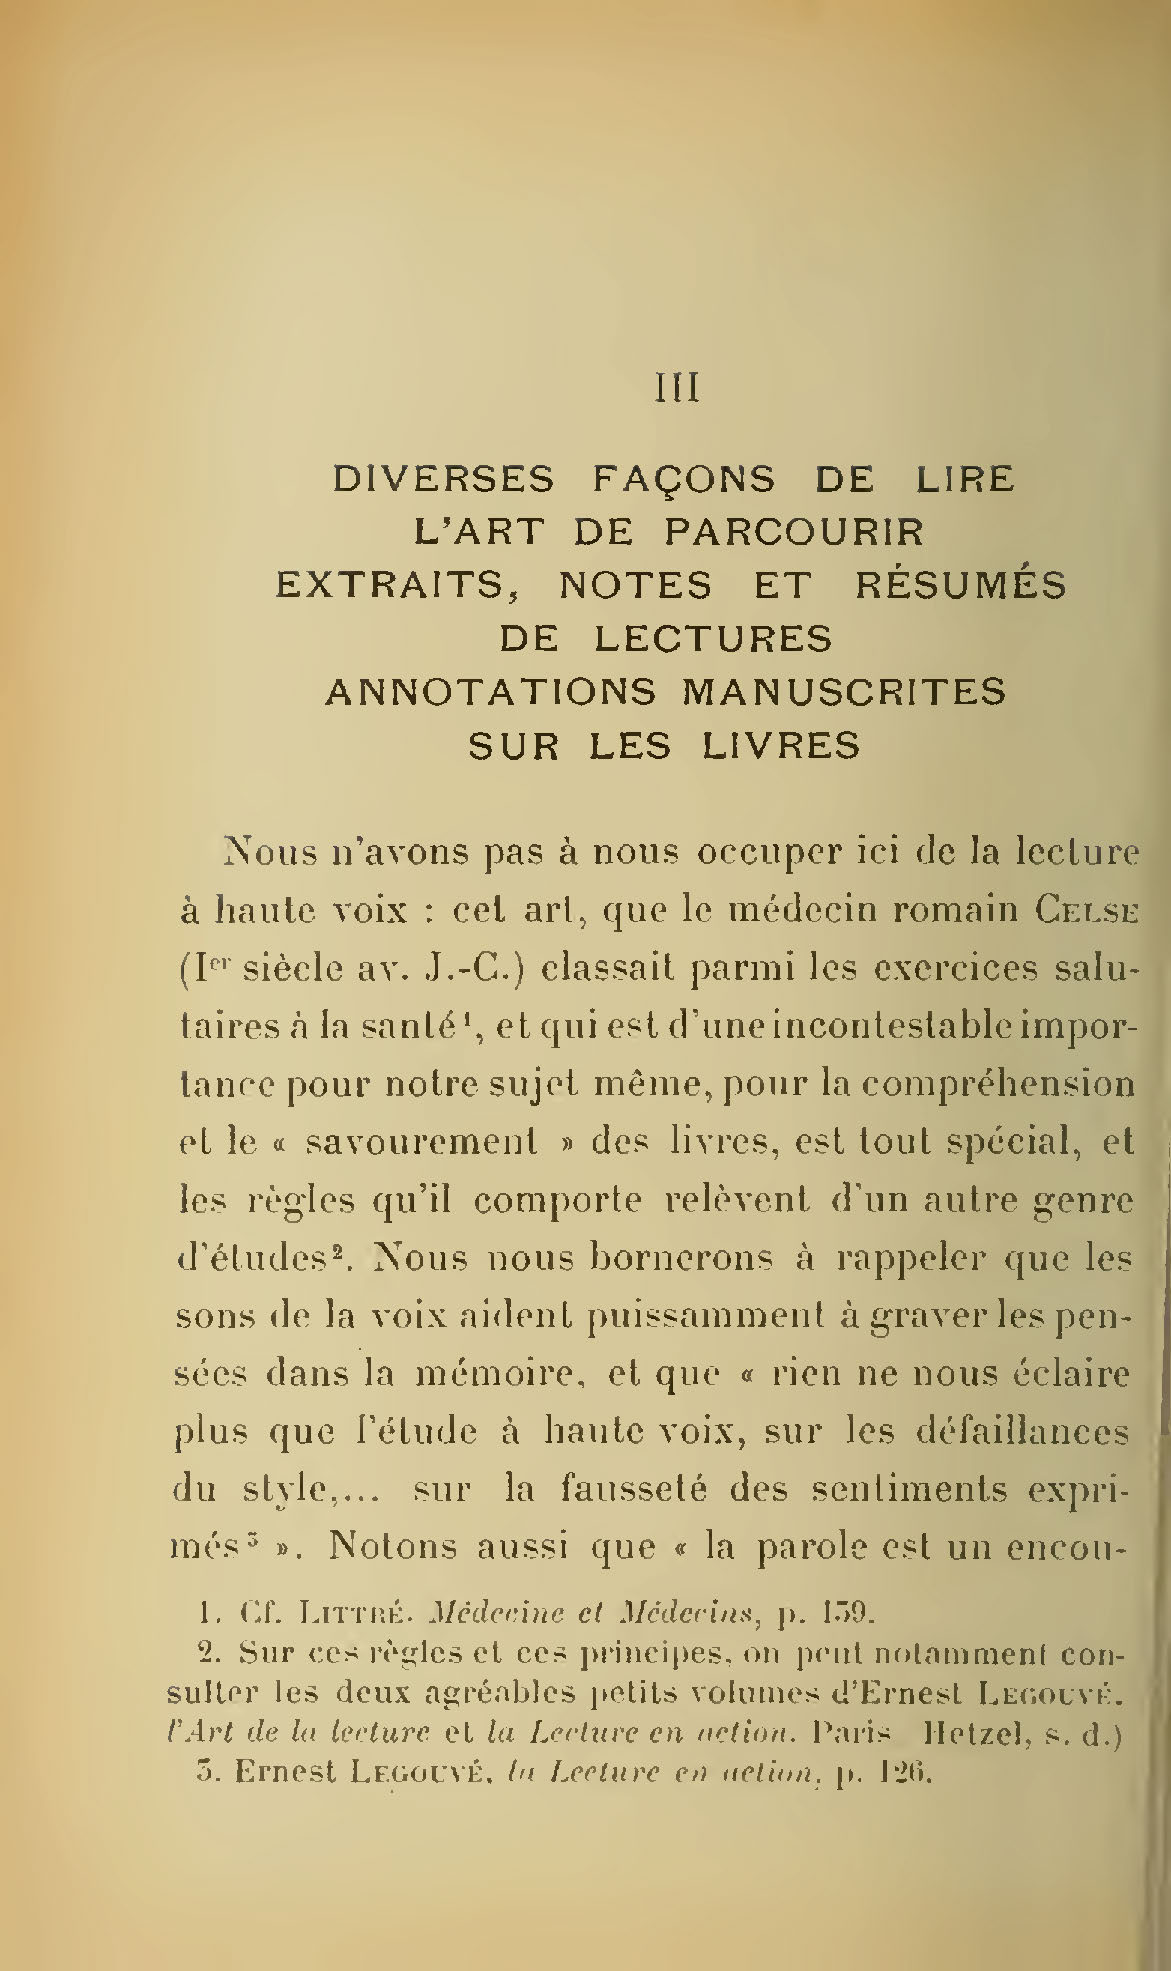 Albert Cim, Le Livre, t. II, p. 052.